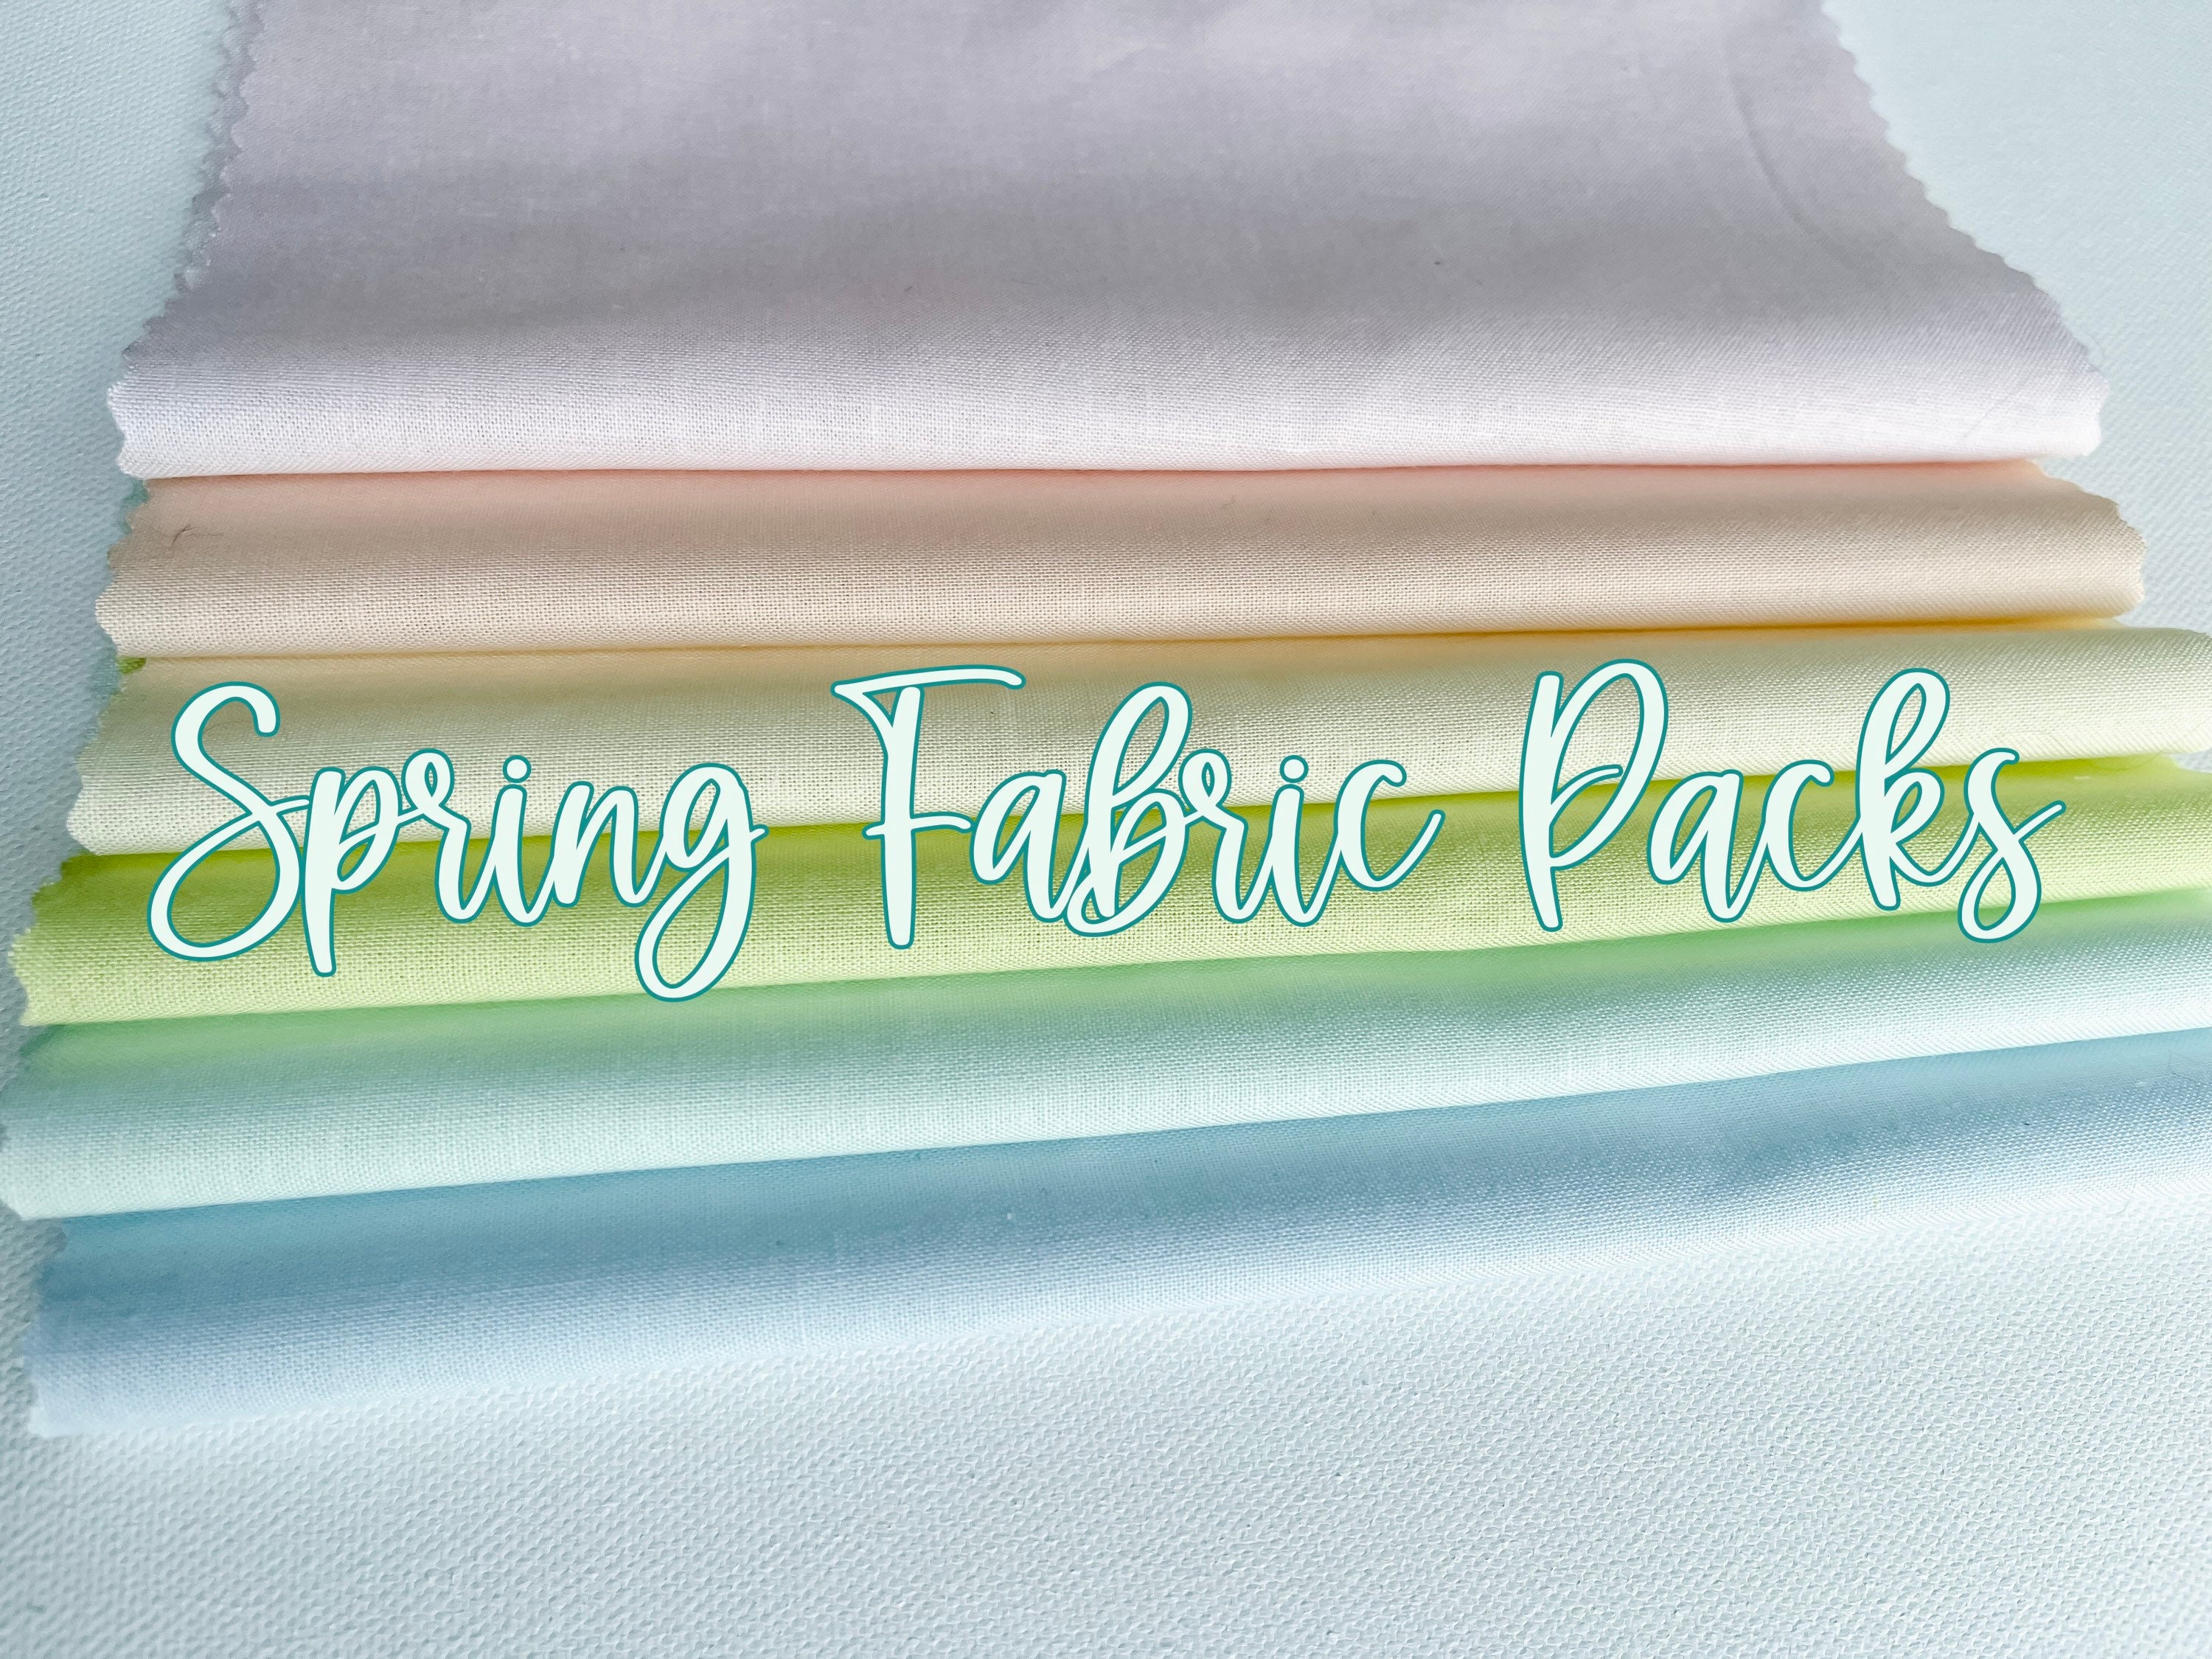 Embroidery Fabric Square Sample Packs - Kona Cotton Fabric, Linen